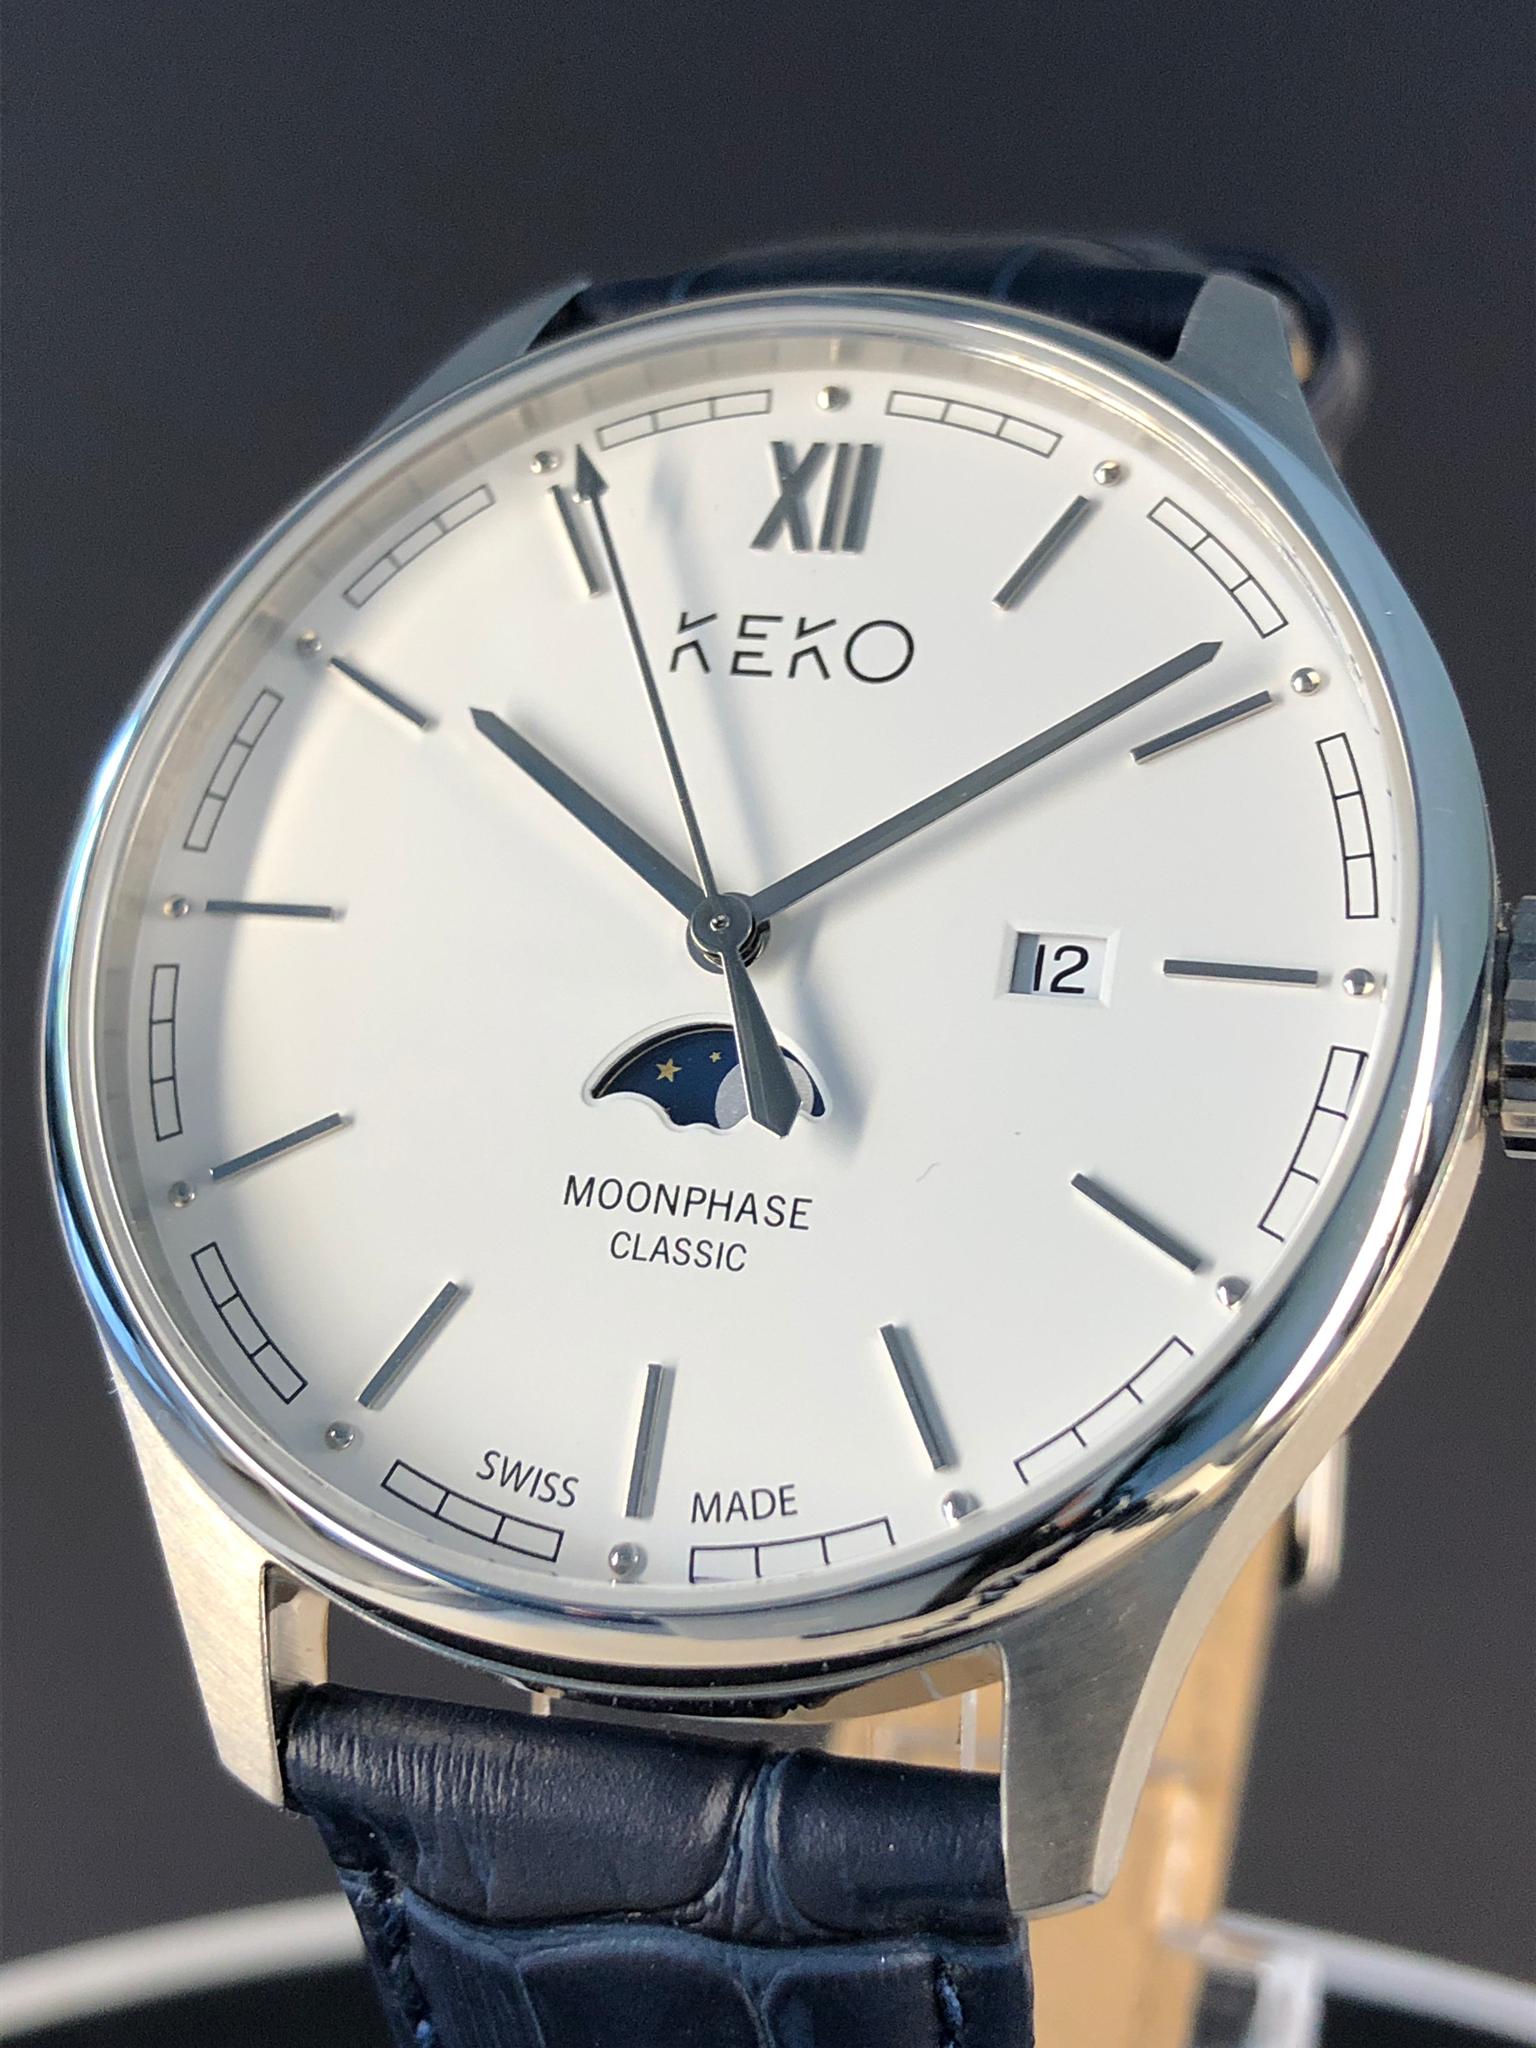 keko-moonphase-classic-white